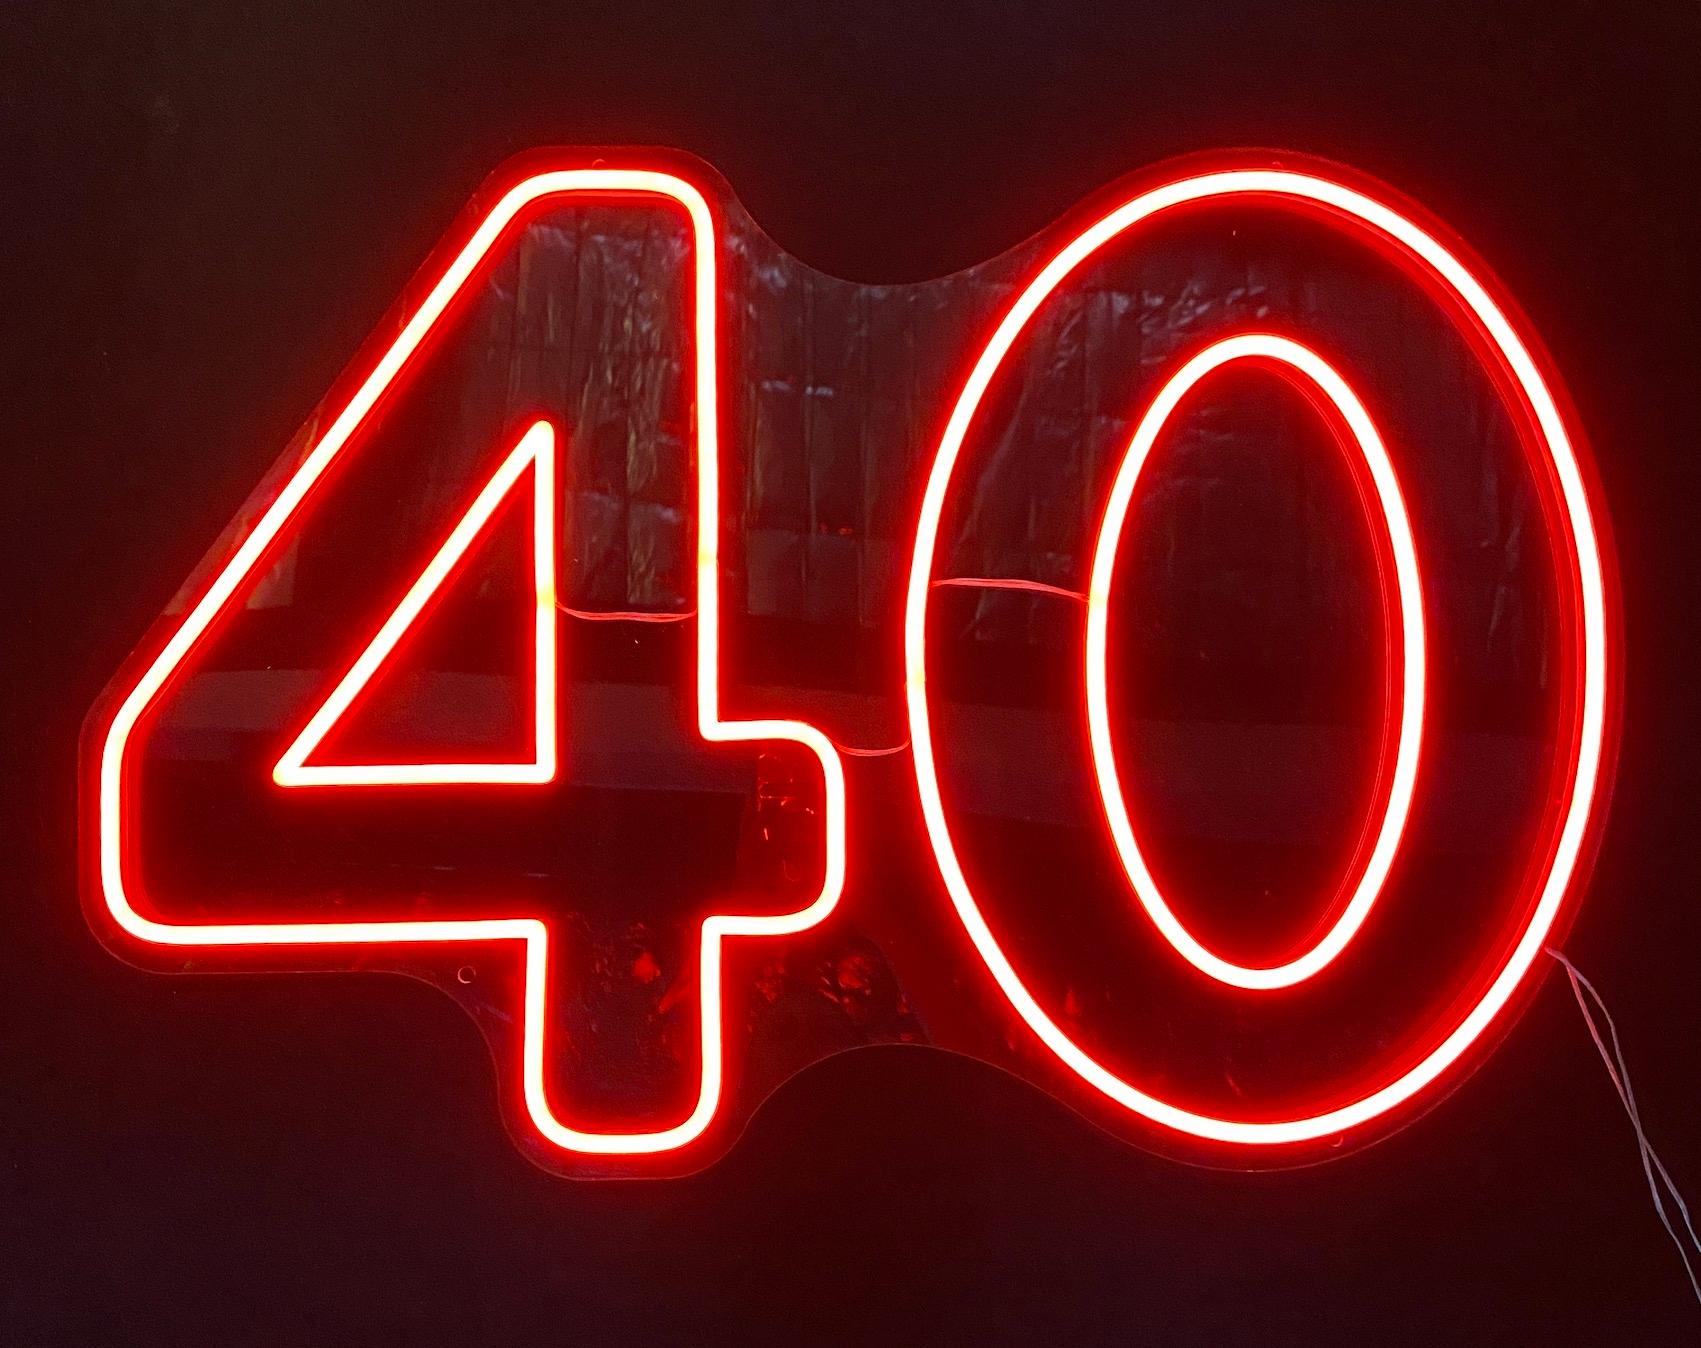 40 neon sign